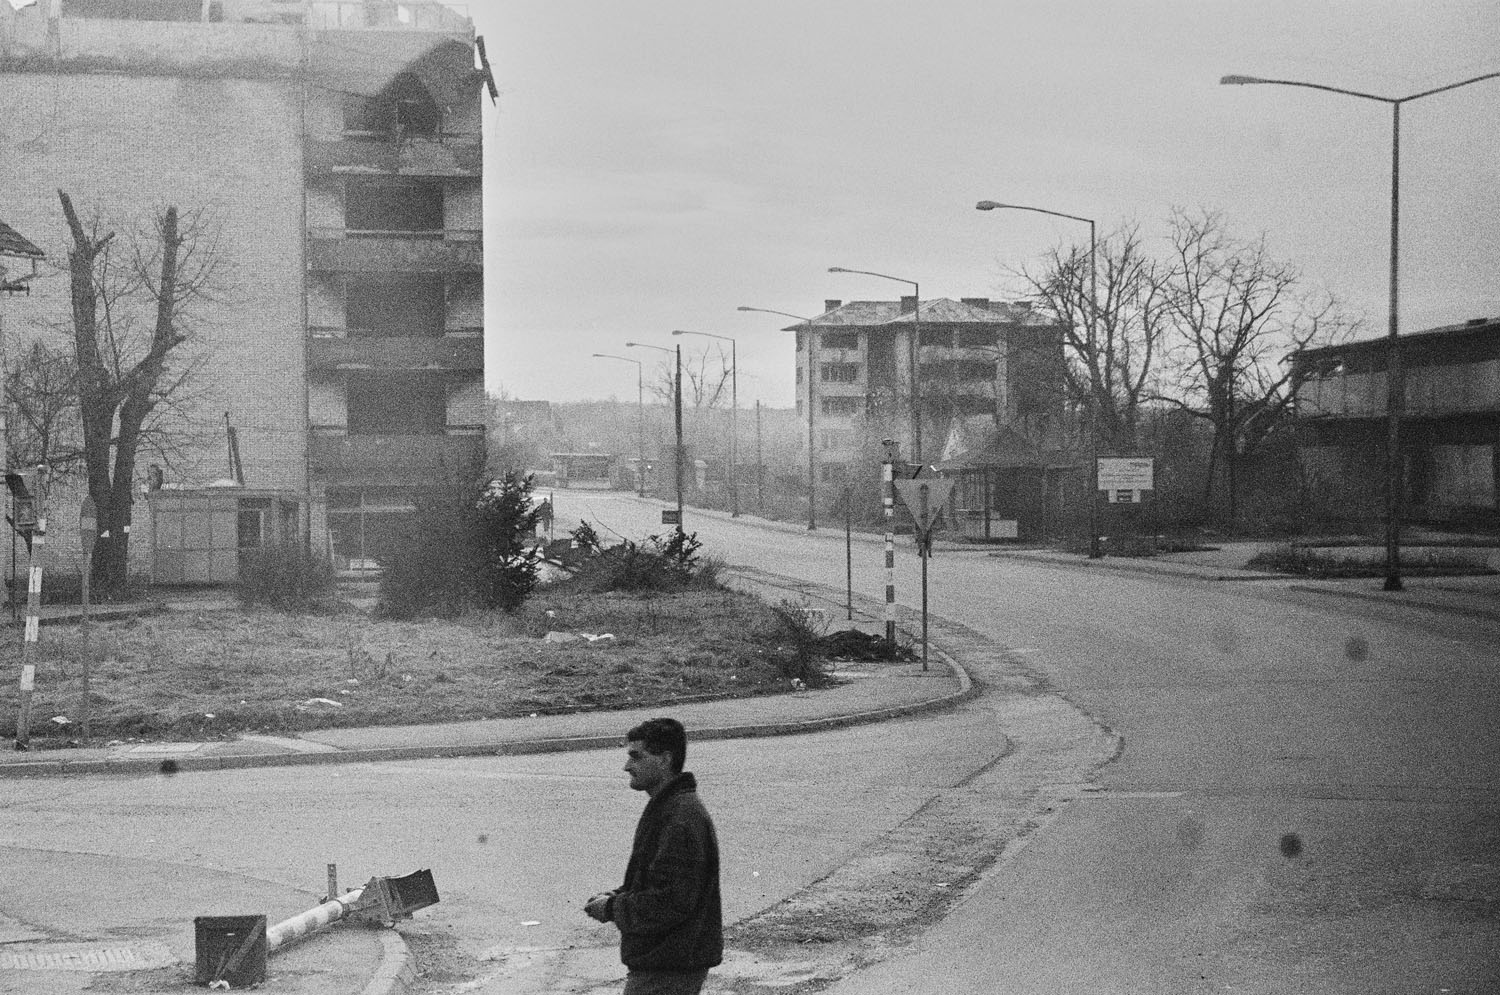 Photos Miro Kuzmanovic took from a bus leaving the former Yugoslavia in 1992